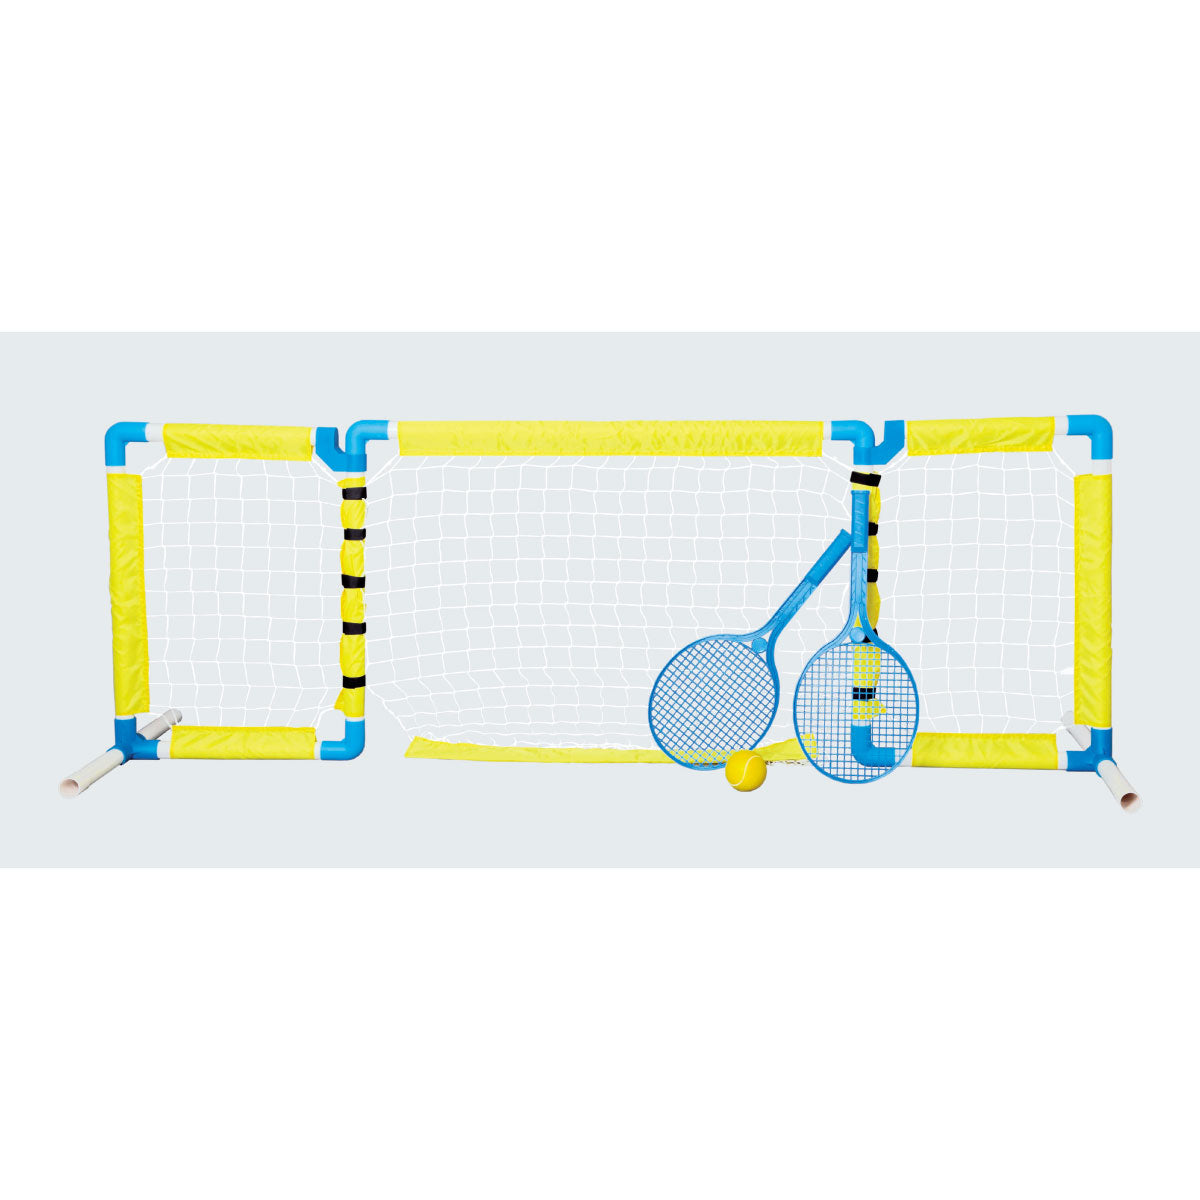 NSG Sports 3 in 1 Combo - Soccer, Tennis, & Hockey